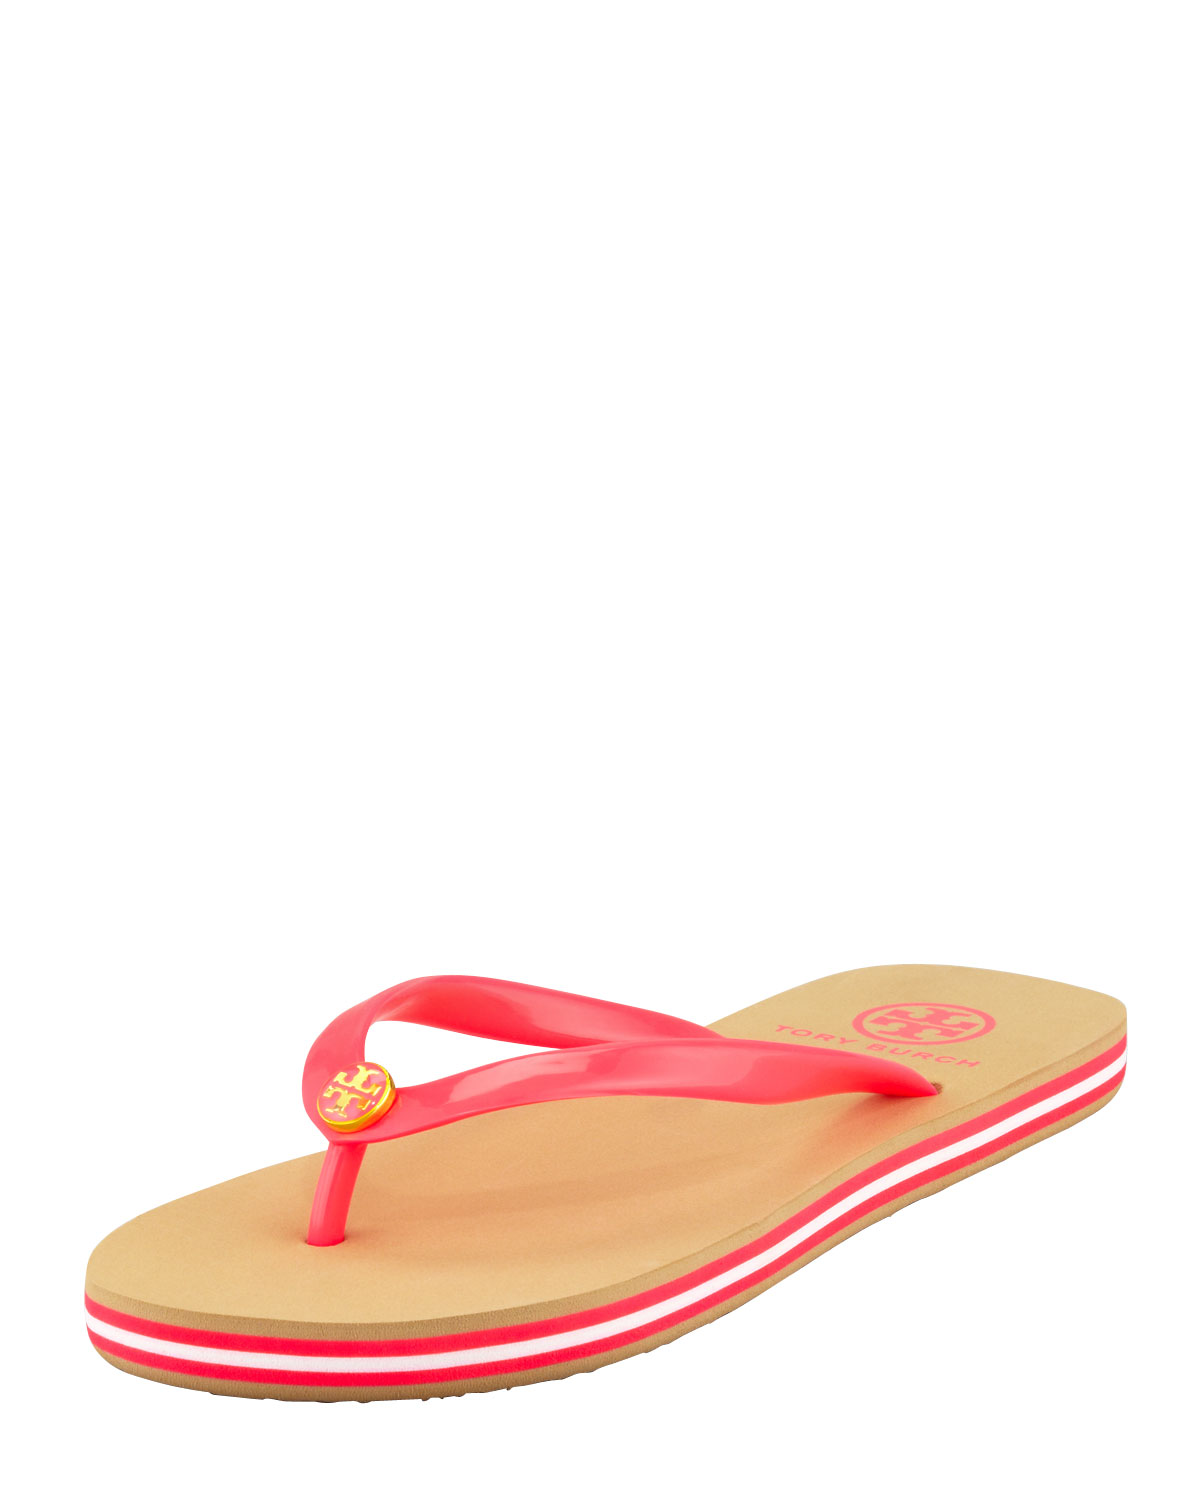 neon pink tory burch sandals